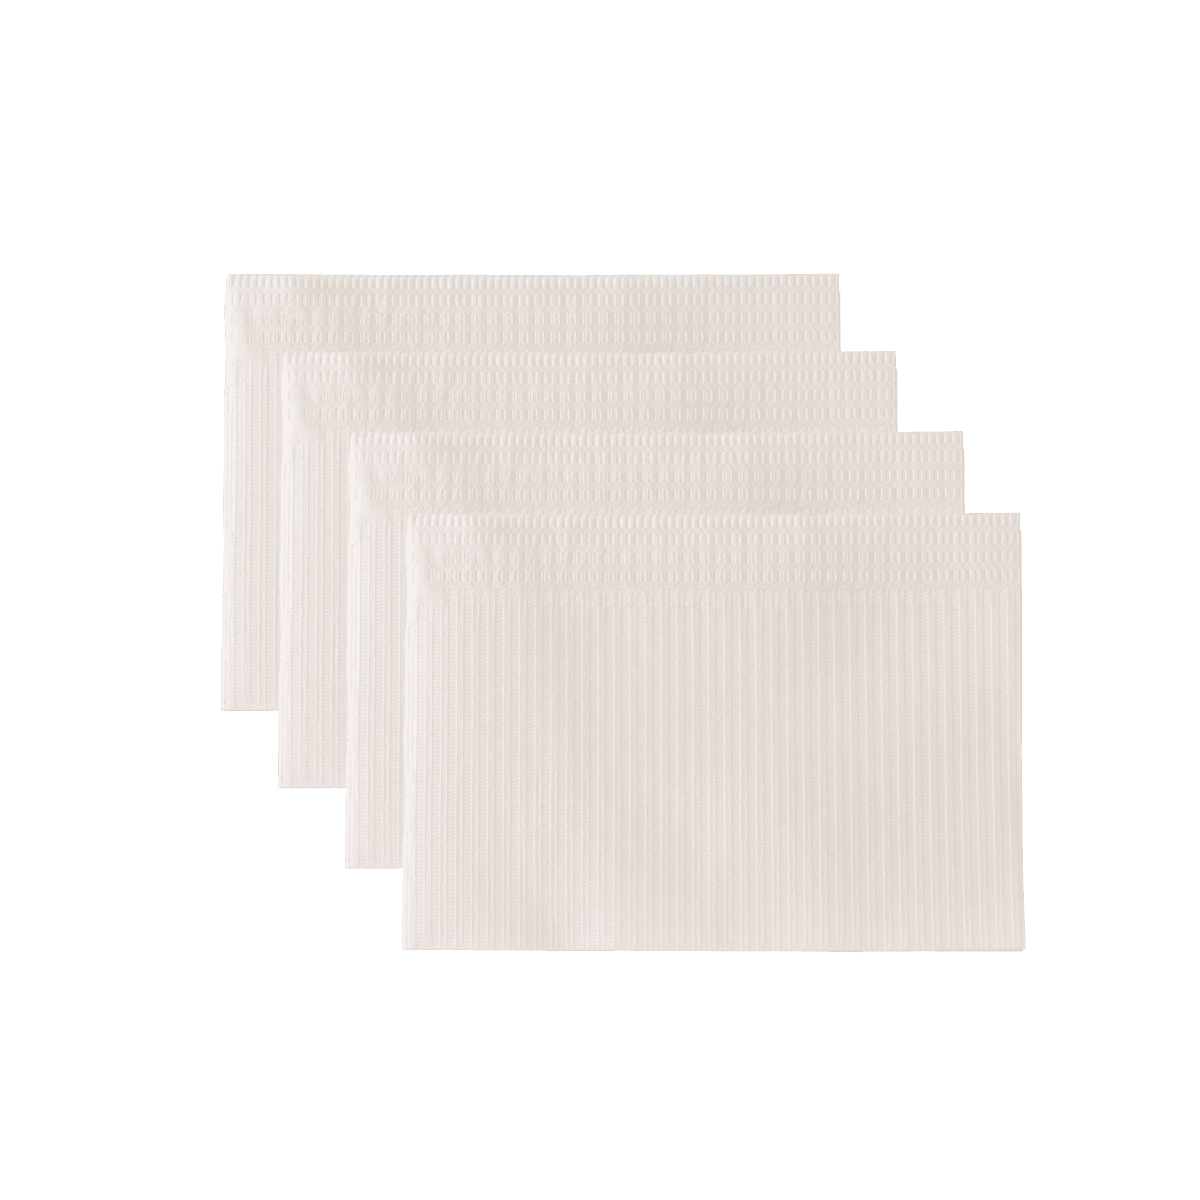 Monoart Patientenservietten Towel UP Farbe: weiß (Euronda)